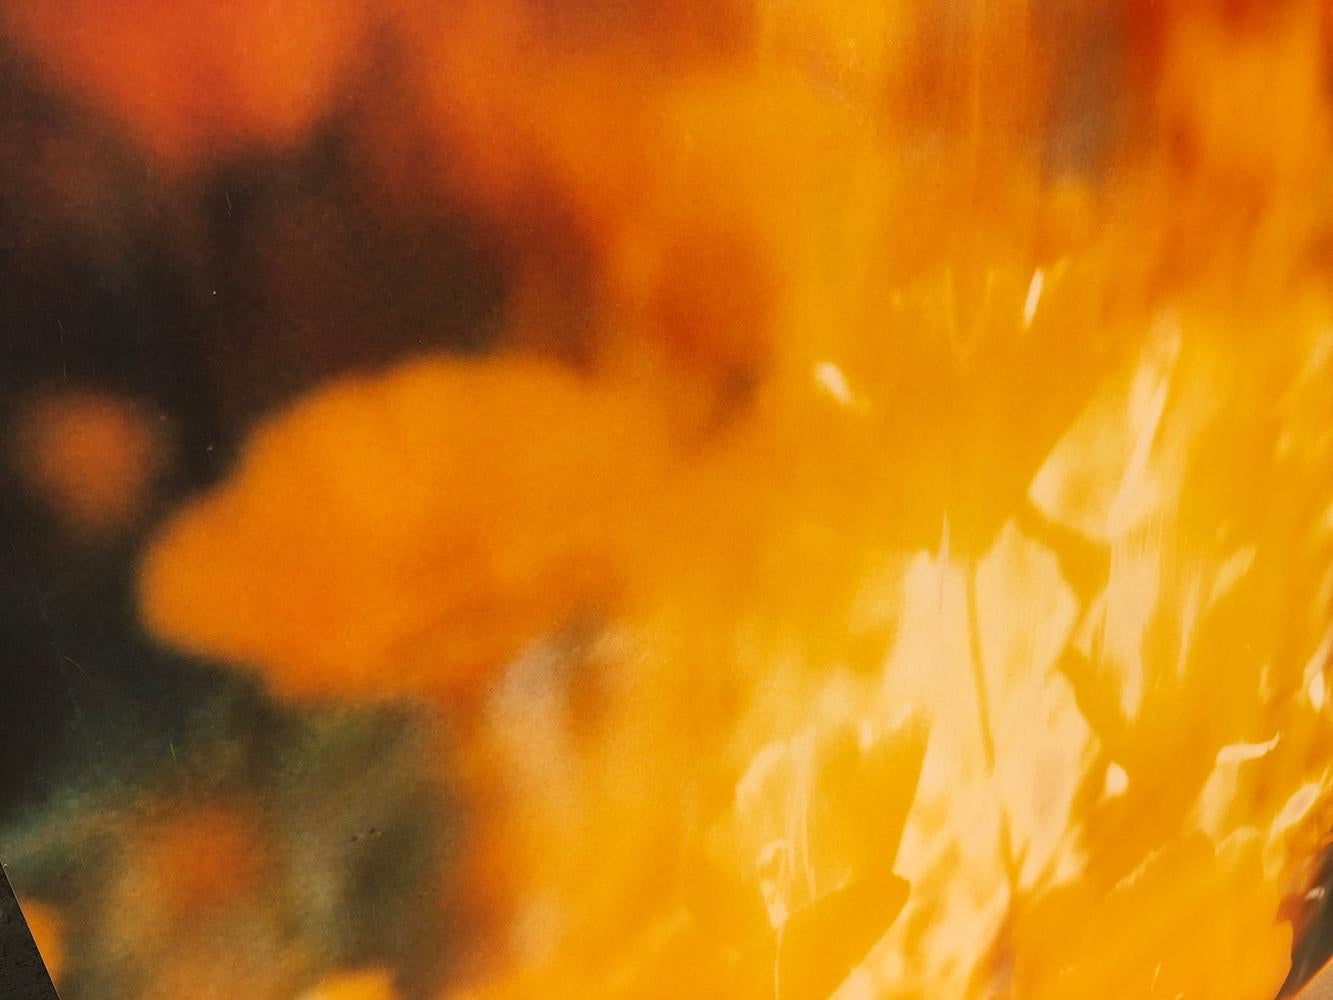 Yellow Flower (The Last Picture Show) Polaroid, 128x126cm, analog vintage print - Contemporary Photograph by Stefanie Schneider